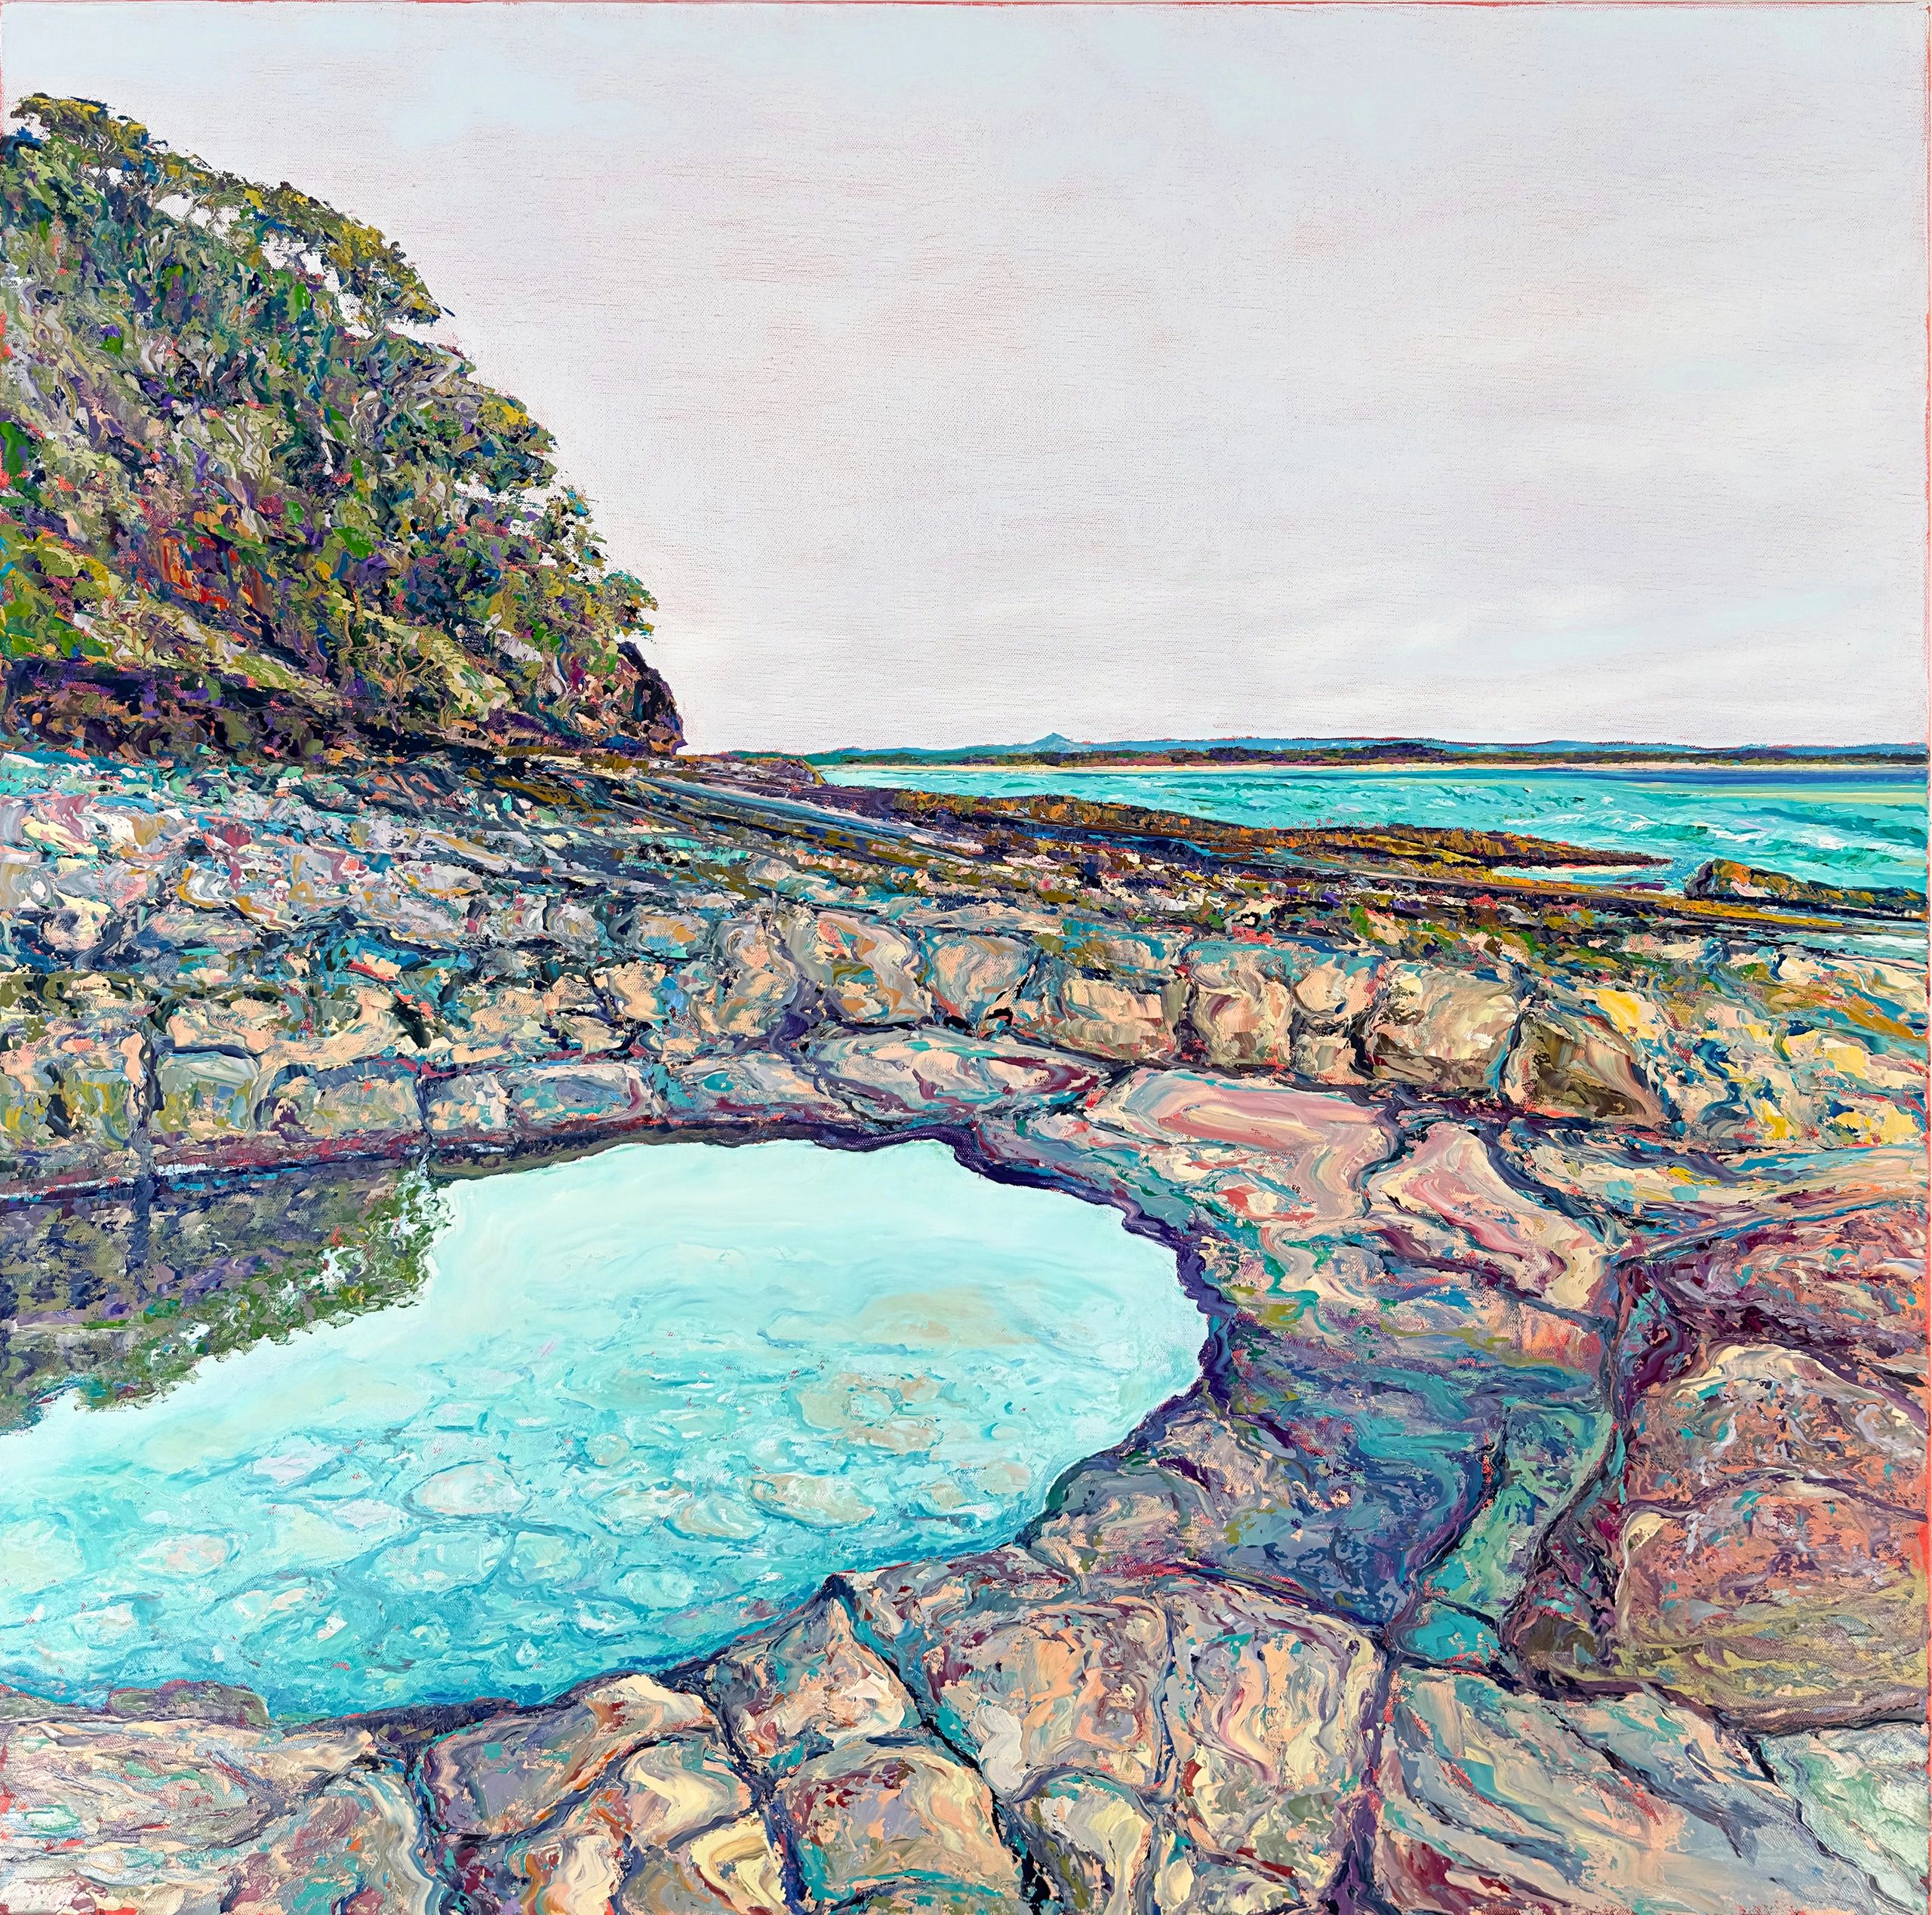 Landscape painting art beautiful beach coast nature gallery contemporary reflection light Noosa